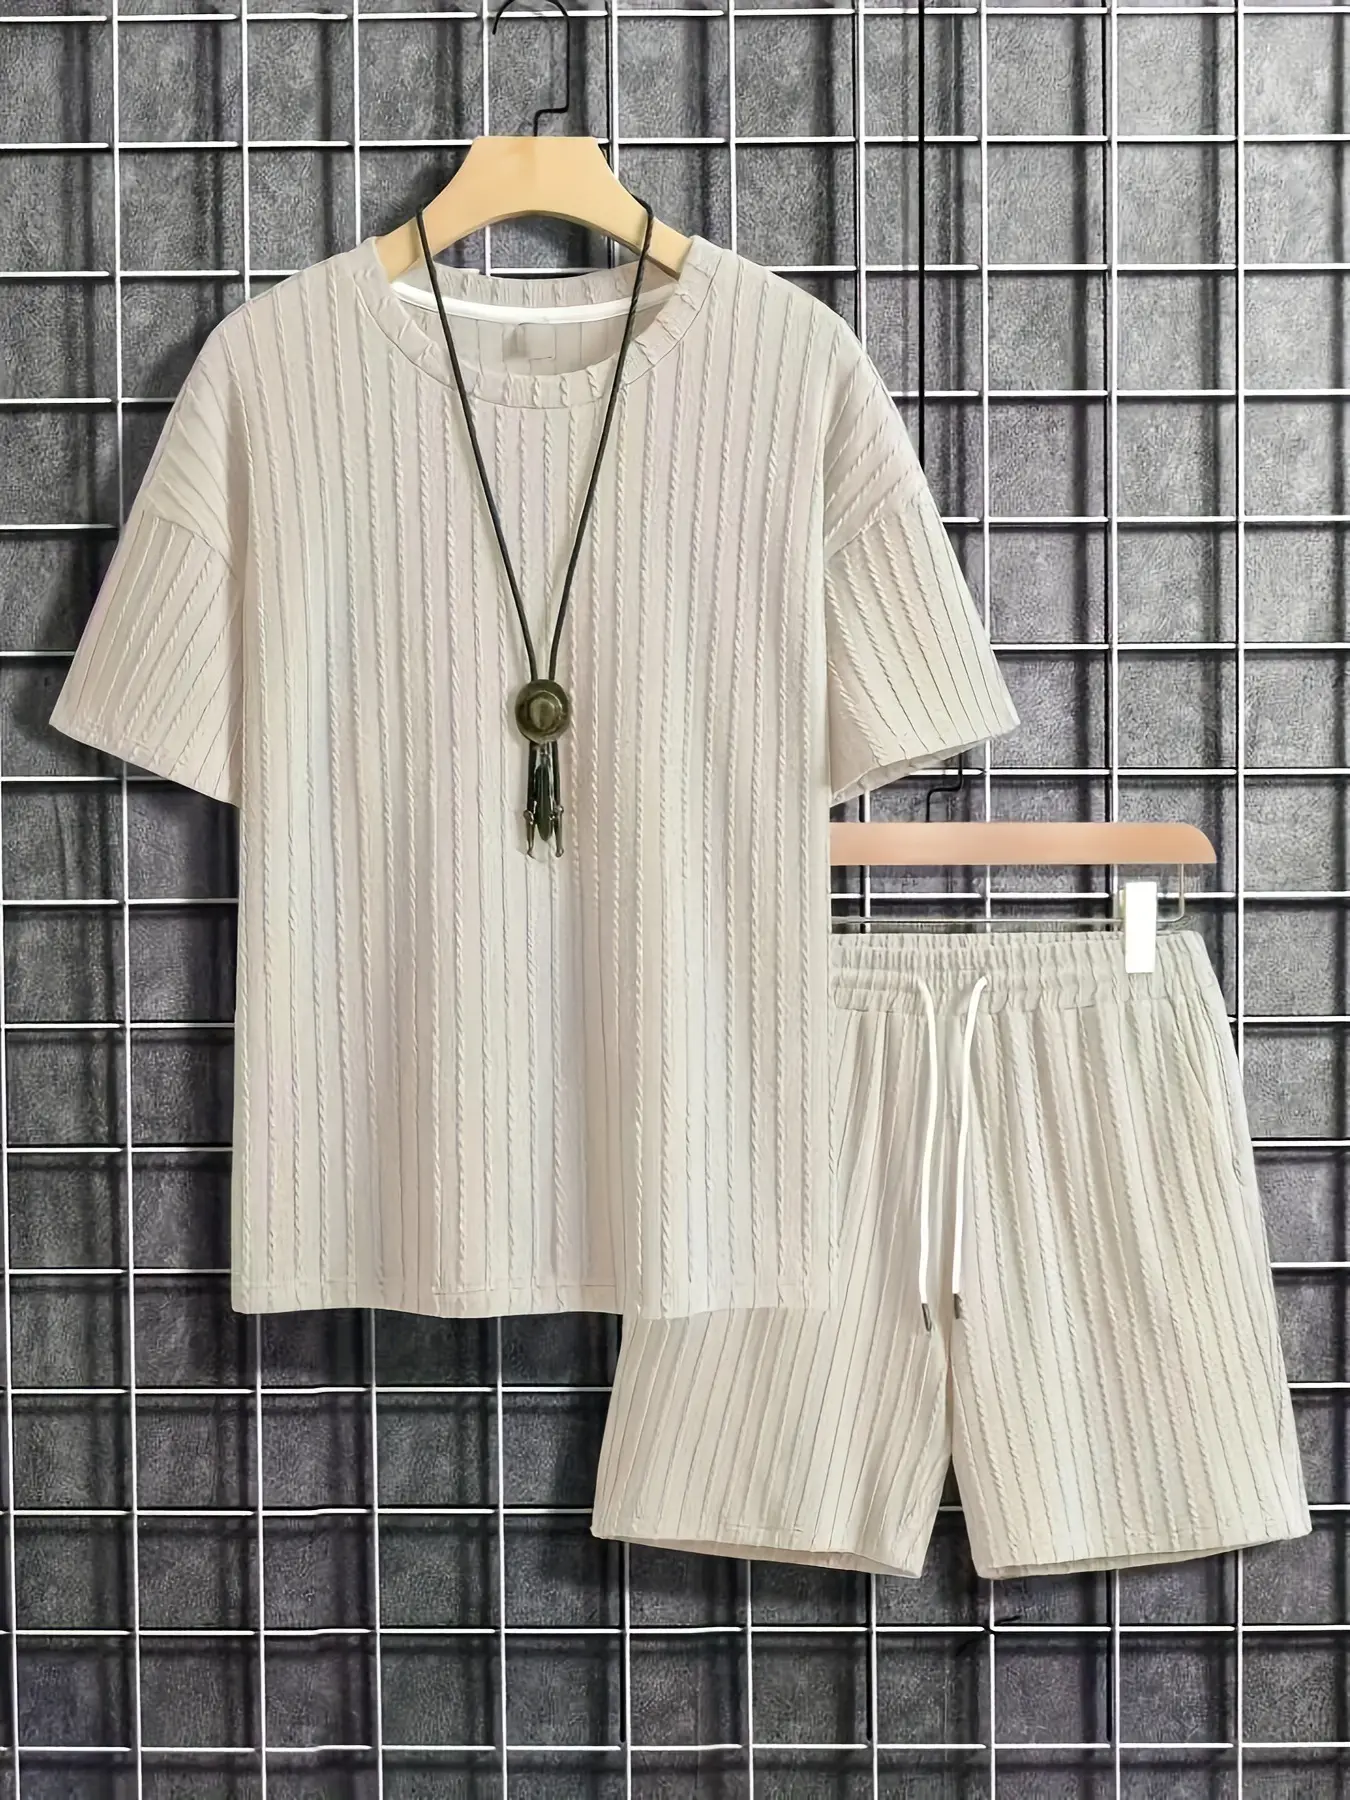 PASUXI Wholesale New Fashion Summer Short Sleeve Shorts Set Linen Thin Lapel Loose Solid Color Mens Suit